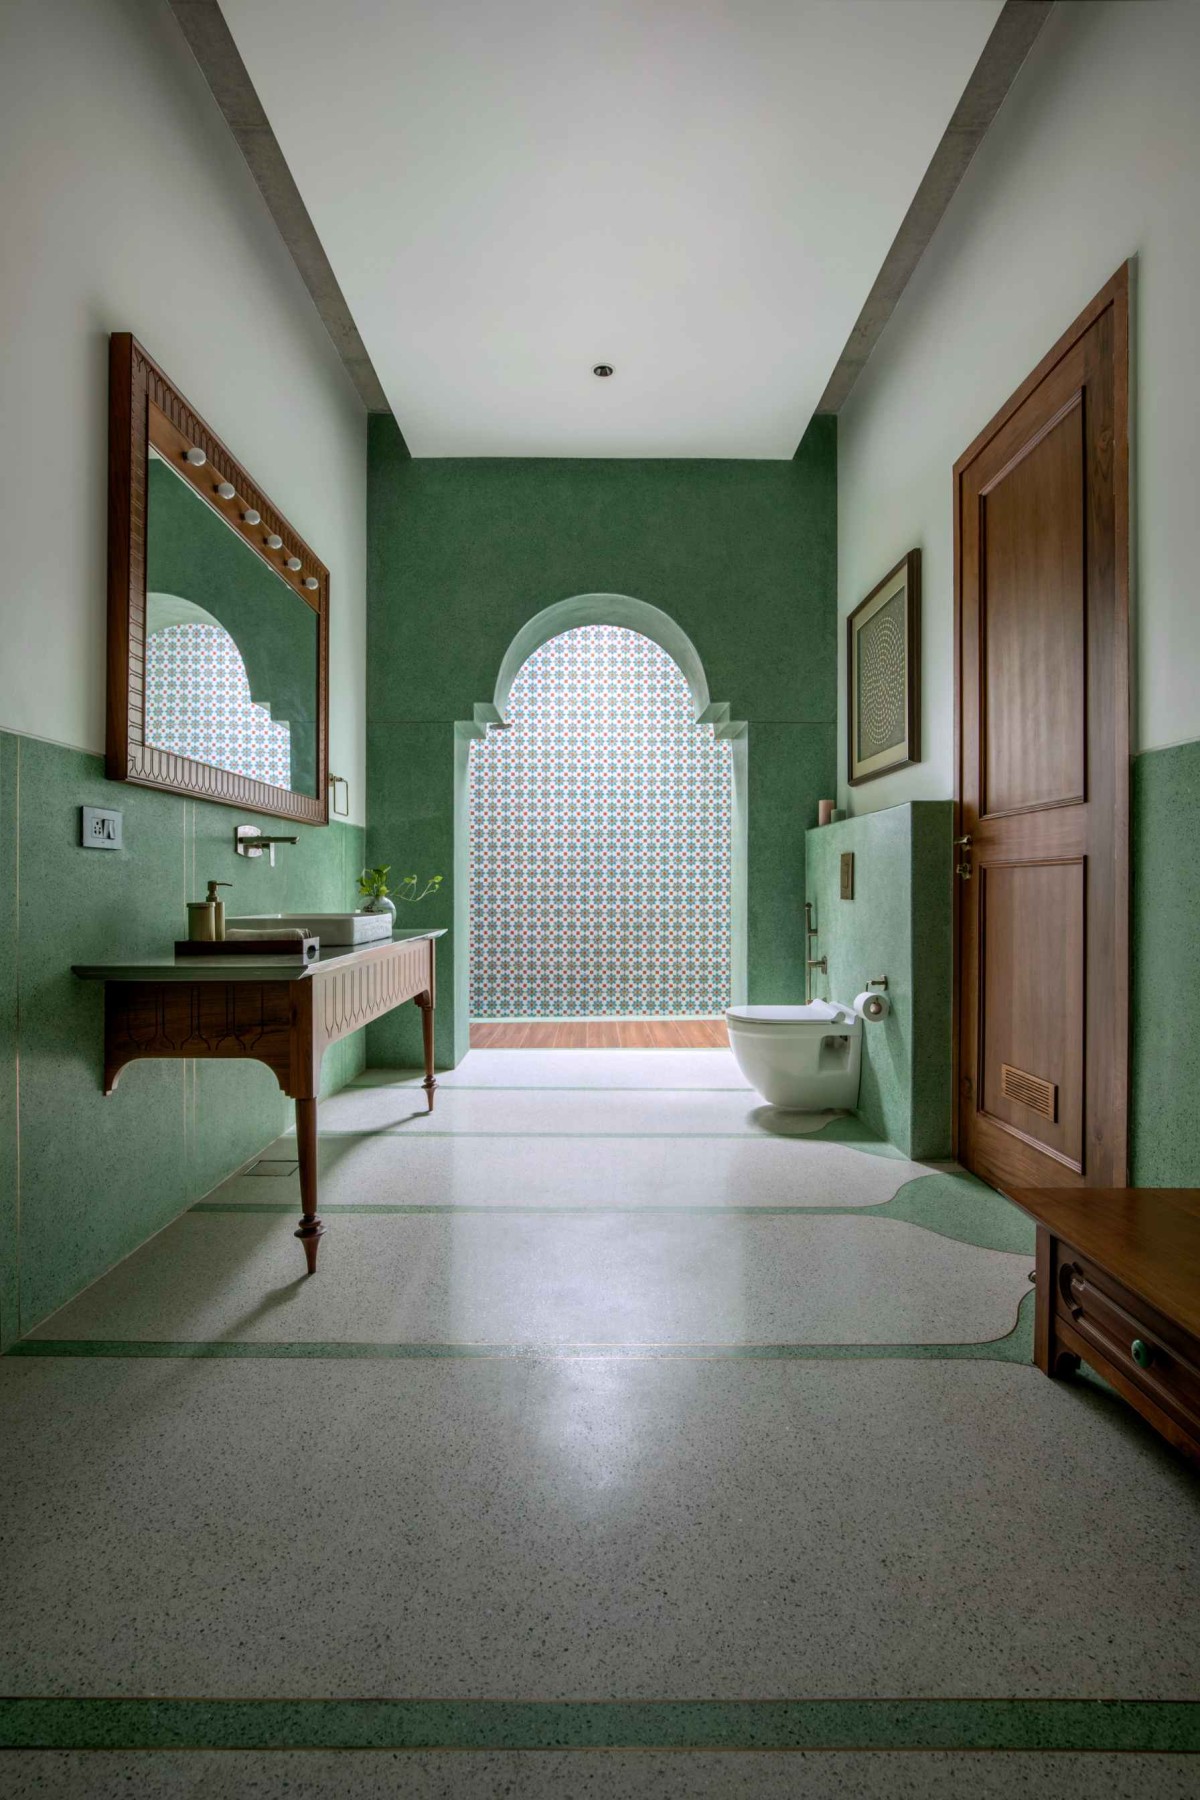 Passage to Toilet of Sitish Parikh Farmhouse by Dipen Gada and Associates